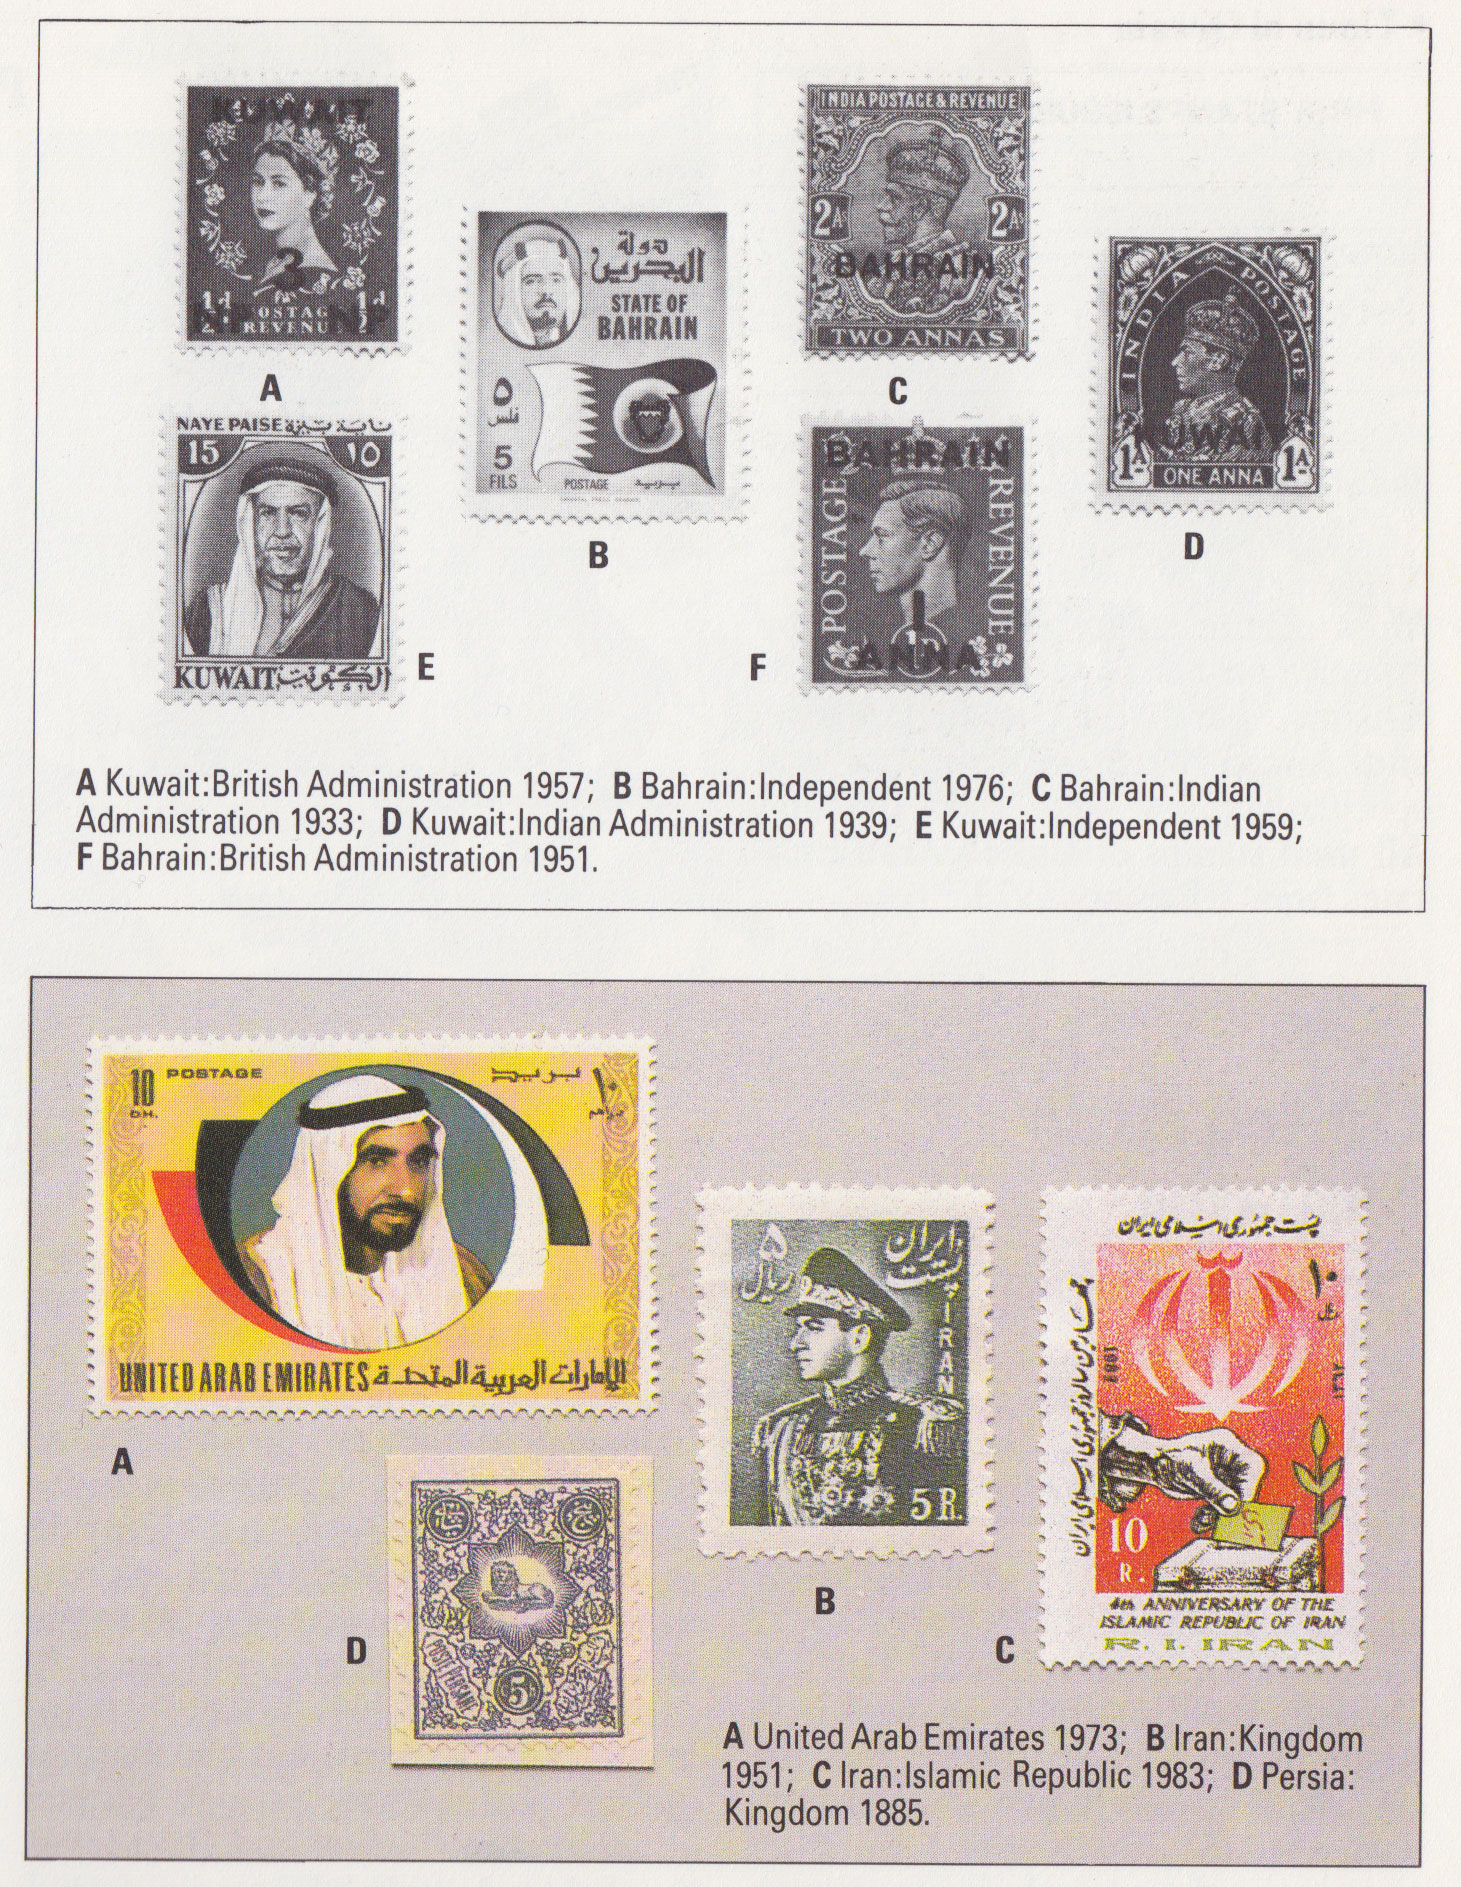 Kuwait Bahrain stamps